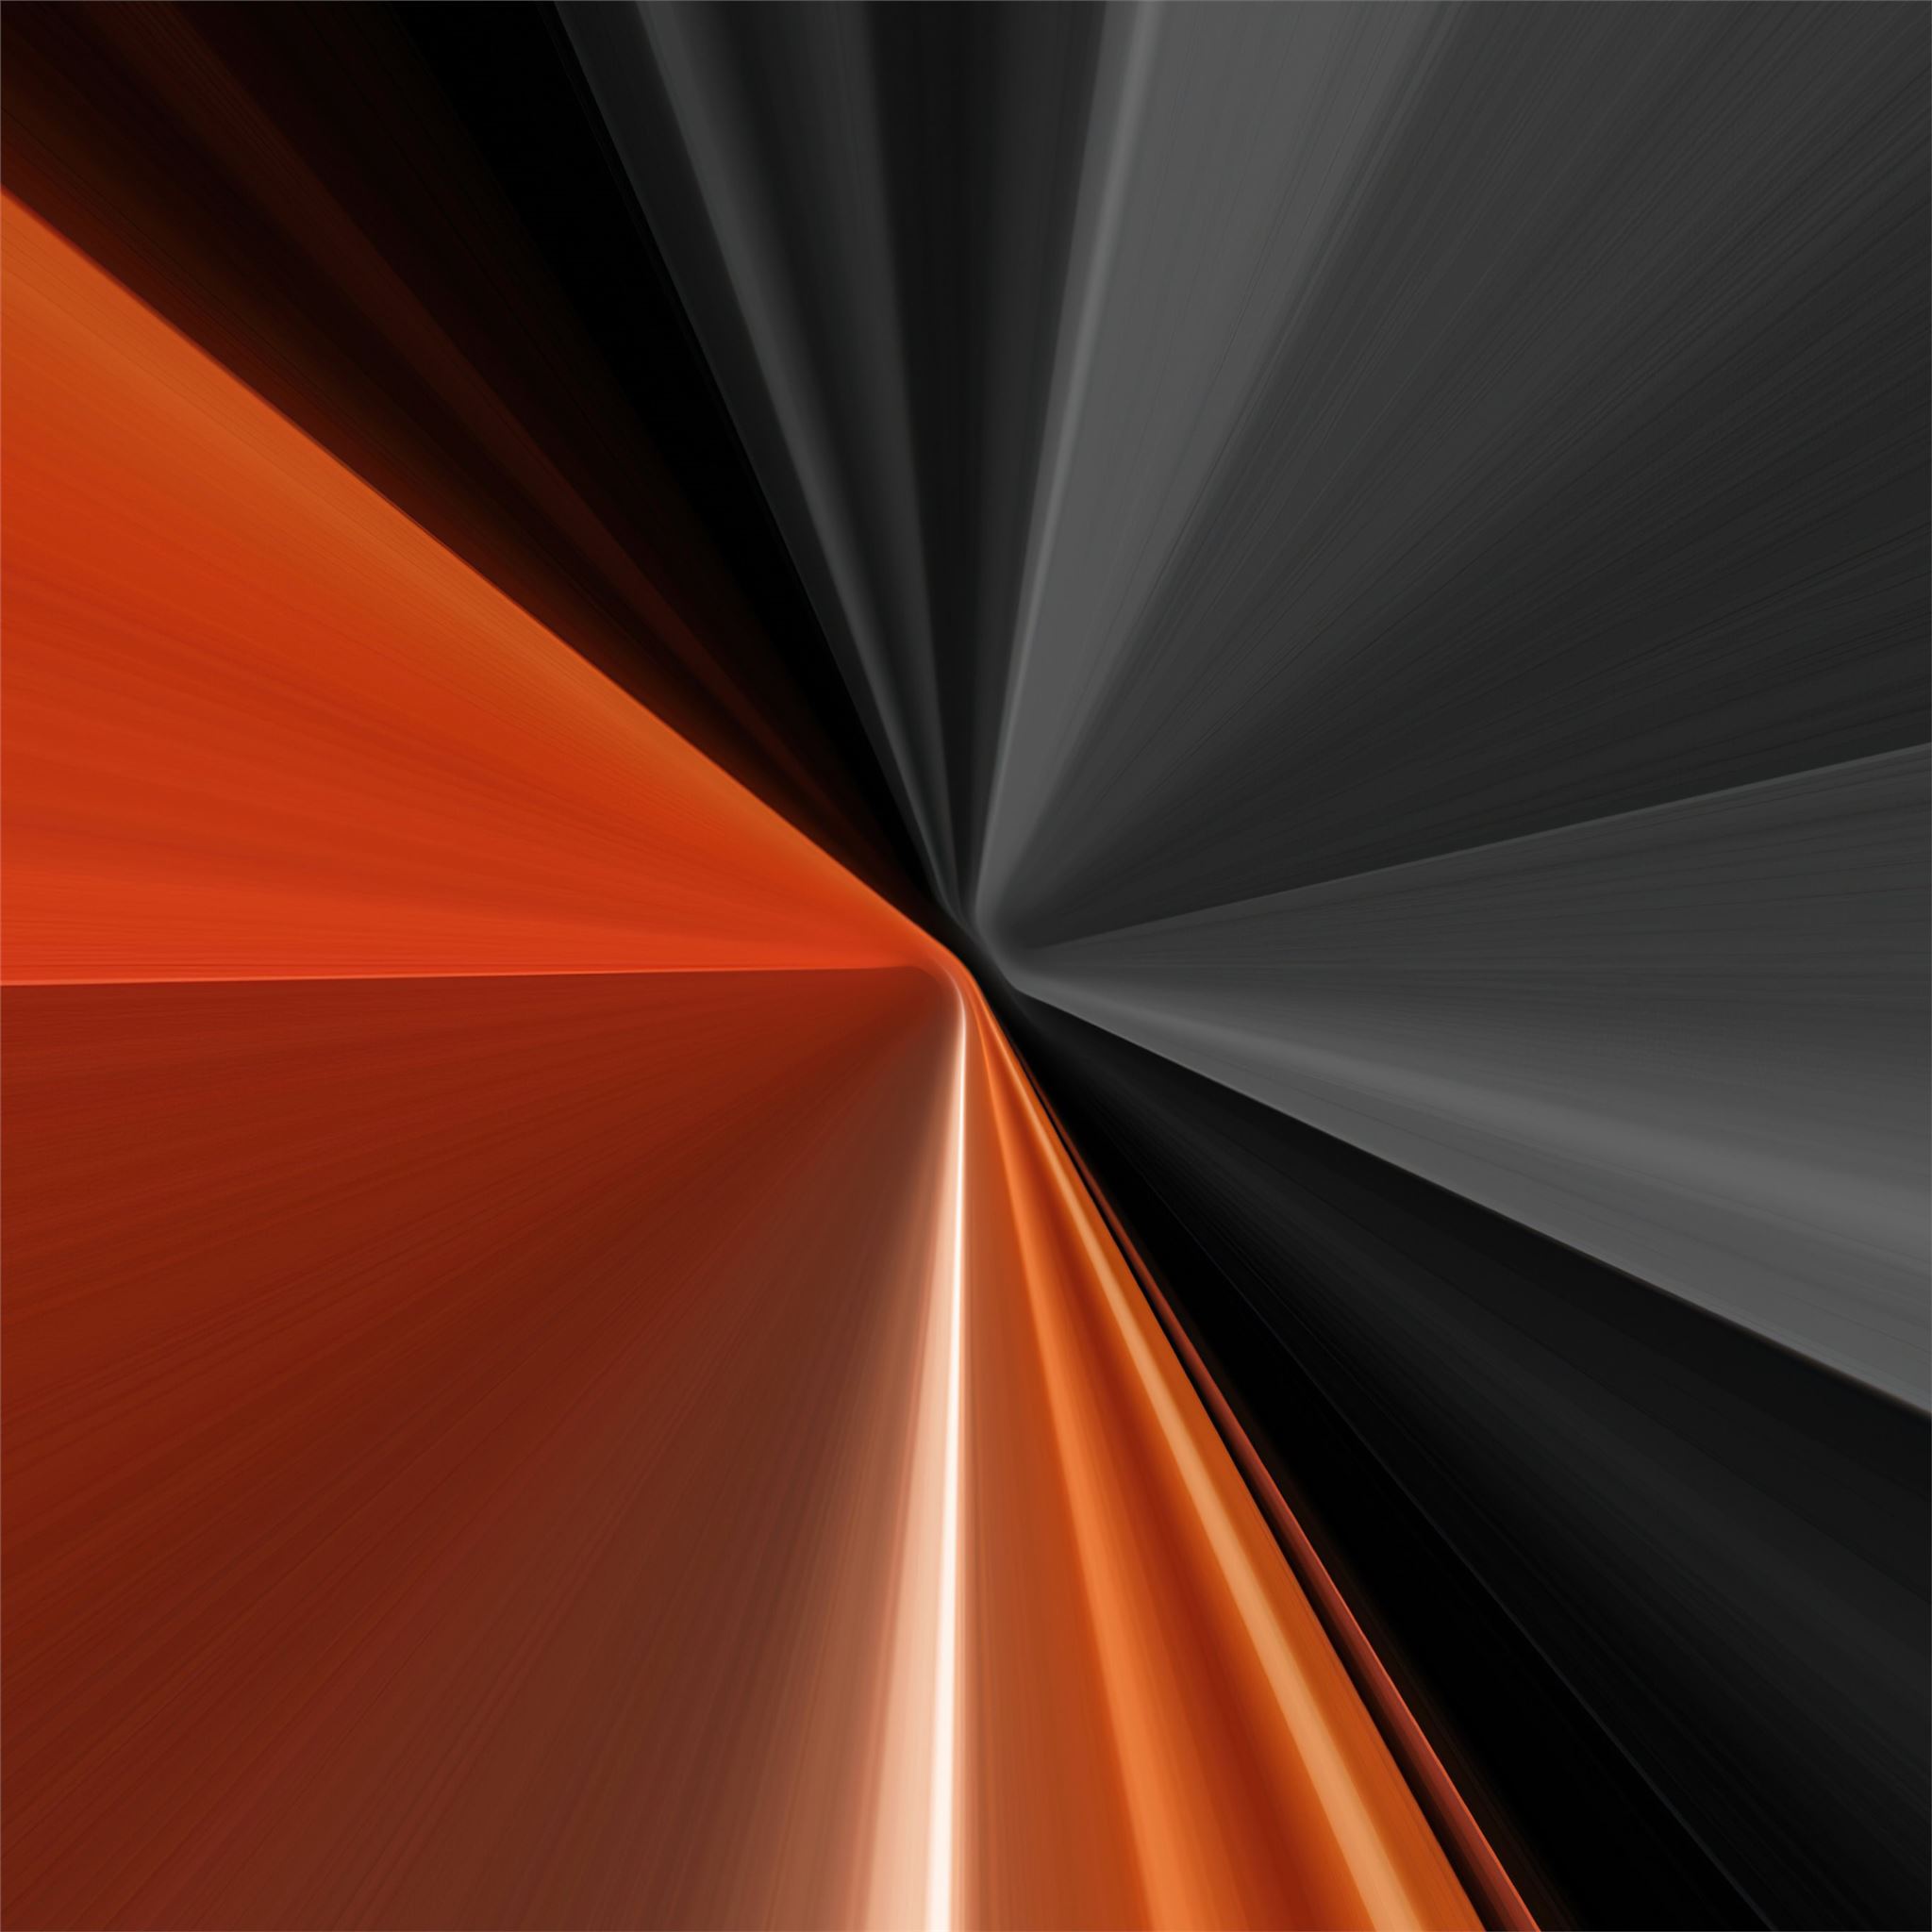 Abstract 4K Orange Dark Colors Wallpapers